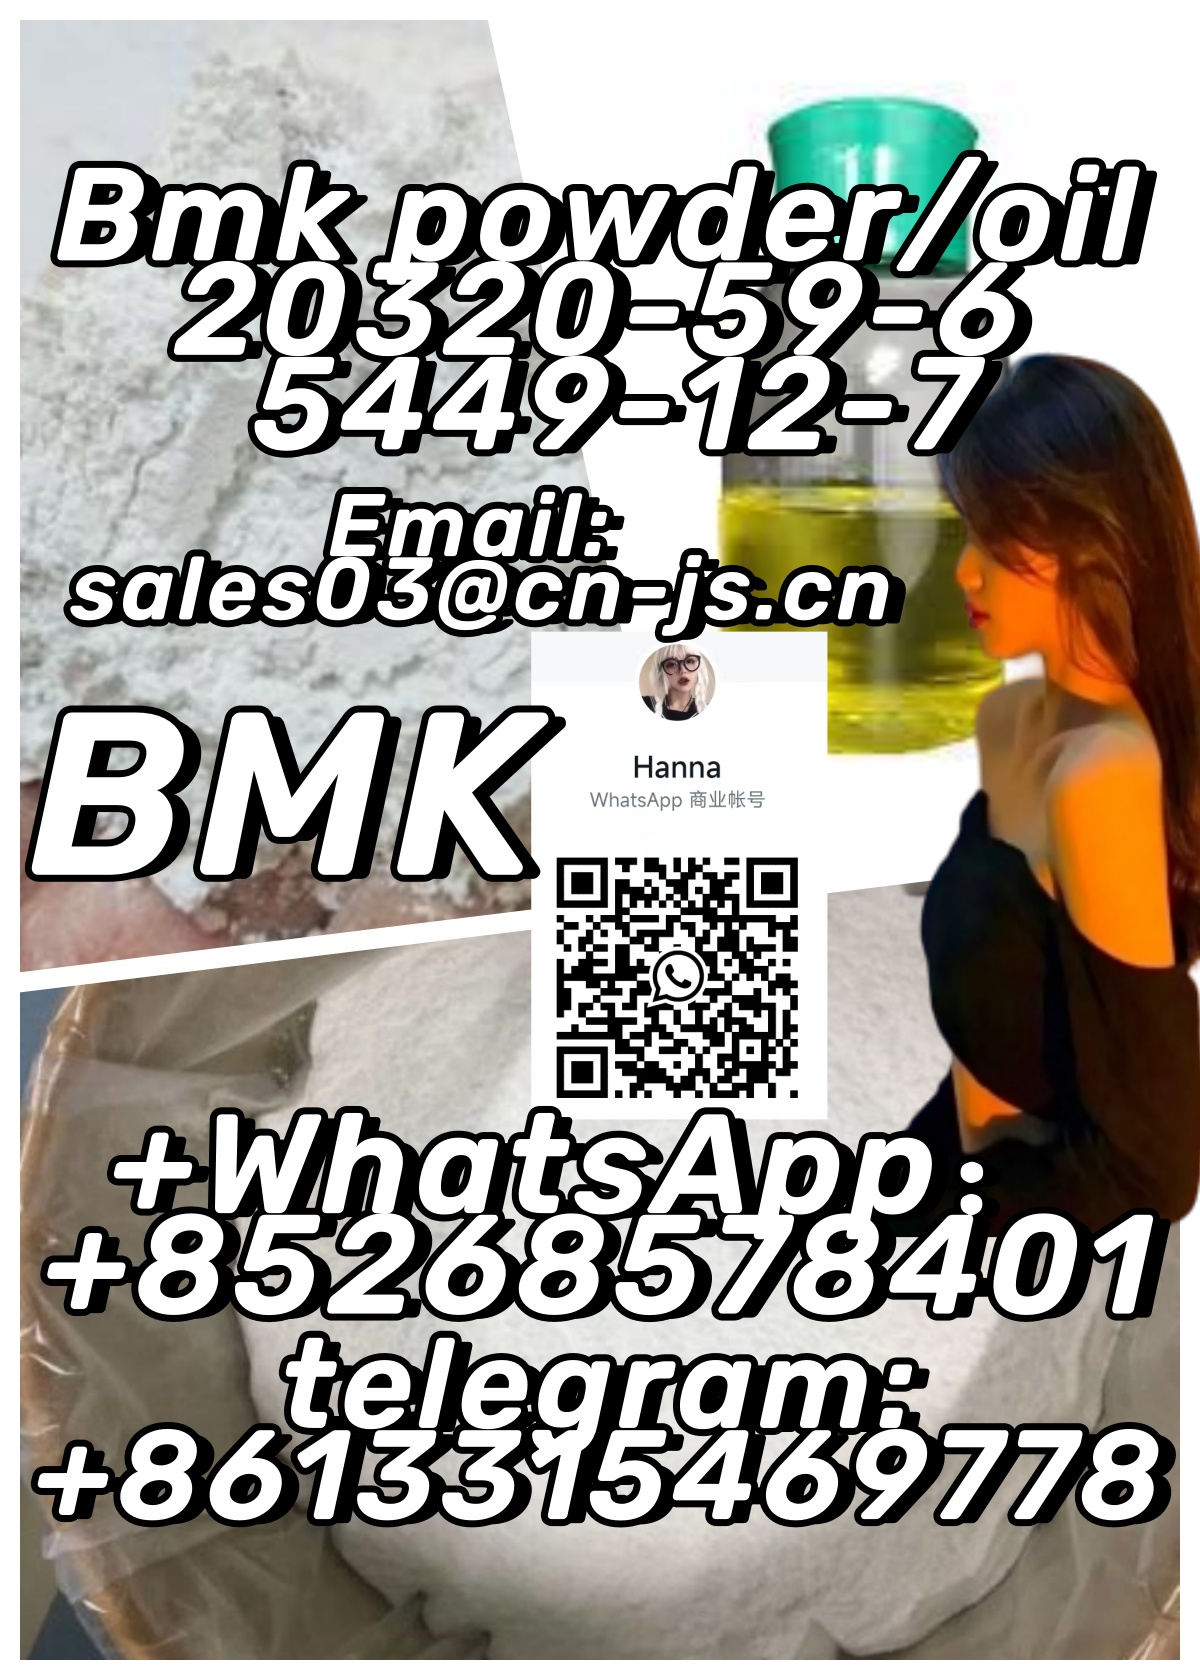 BMK powder BMK oil CAS 5449-12-7 BMK Glycidic Acid,Shijiazhuang,Services,Health & Beauty,77traders